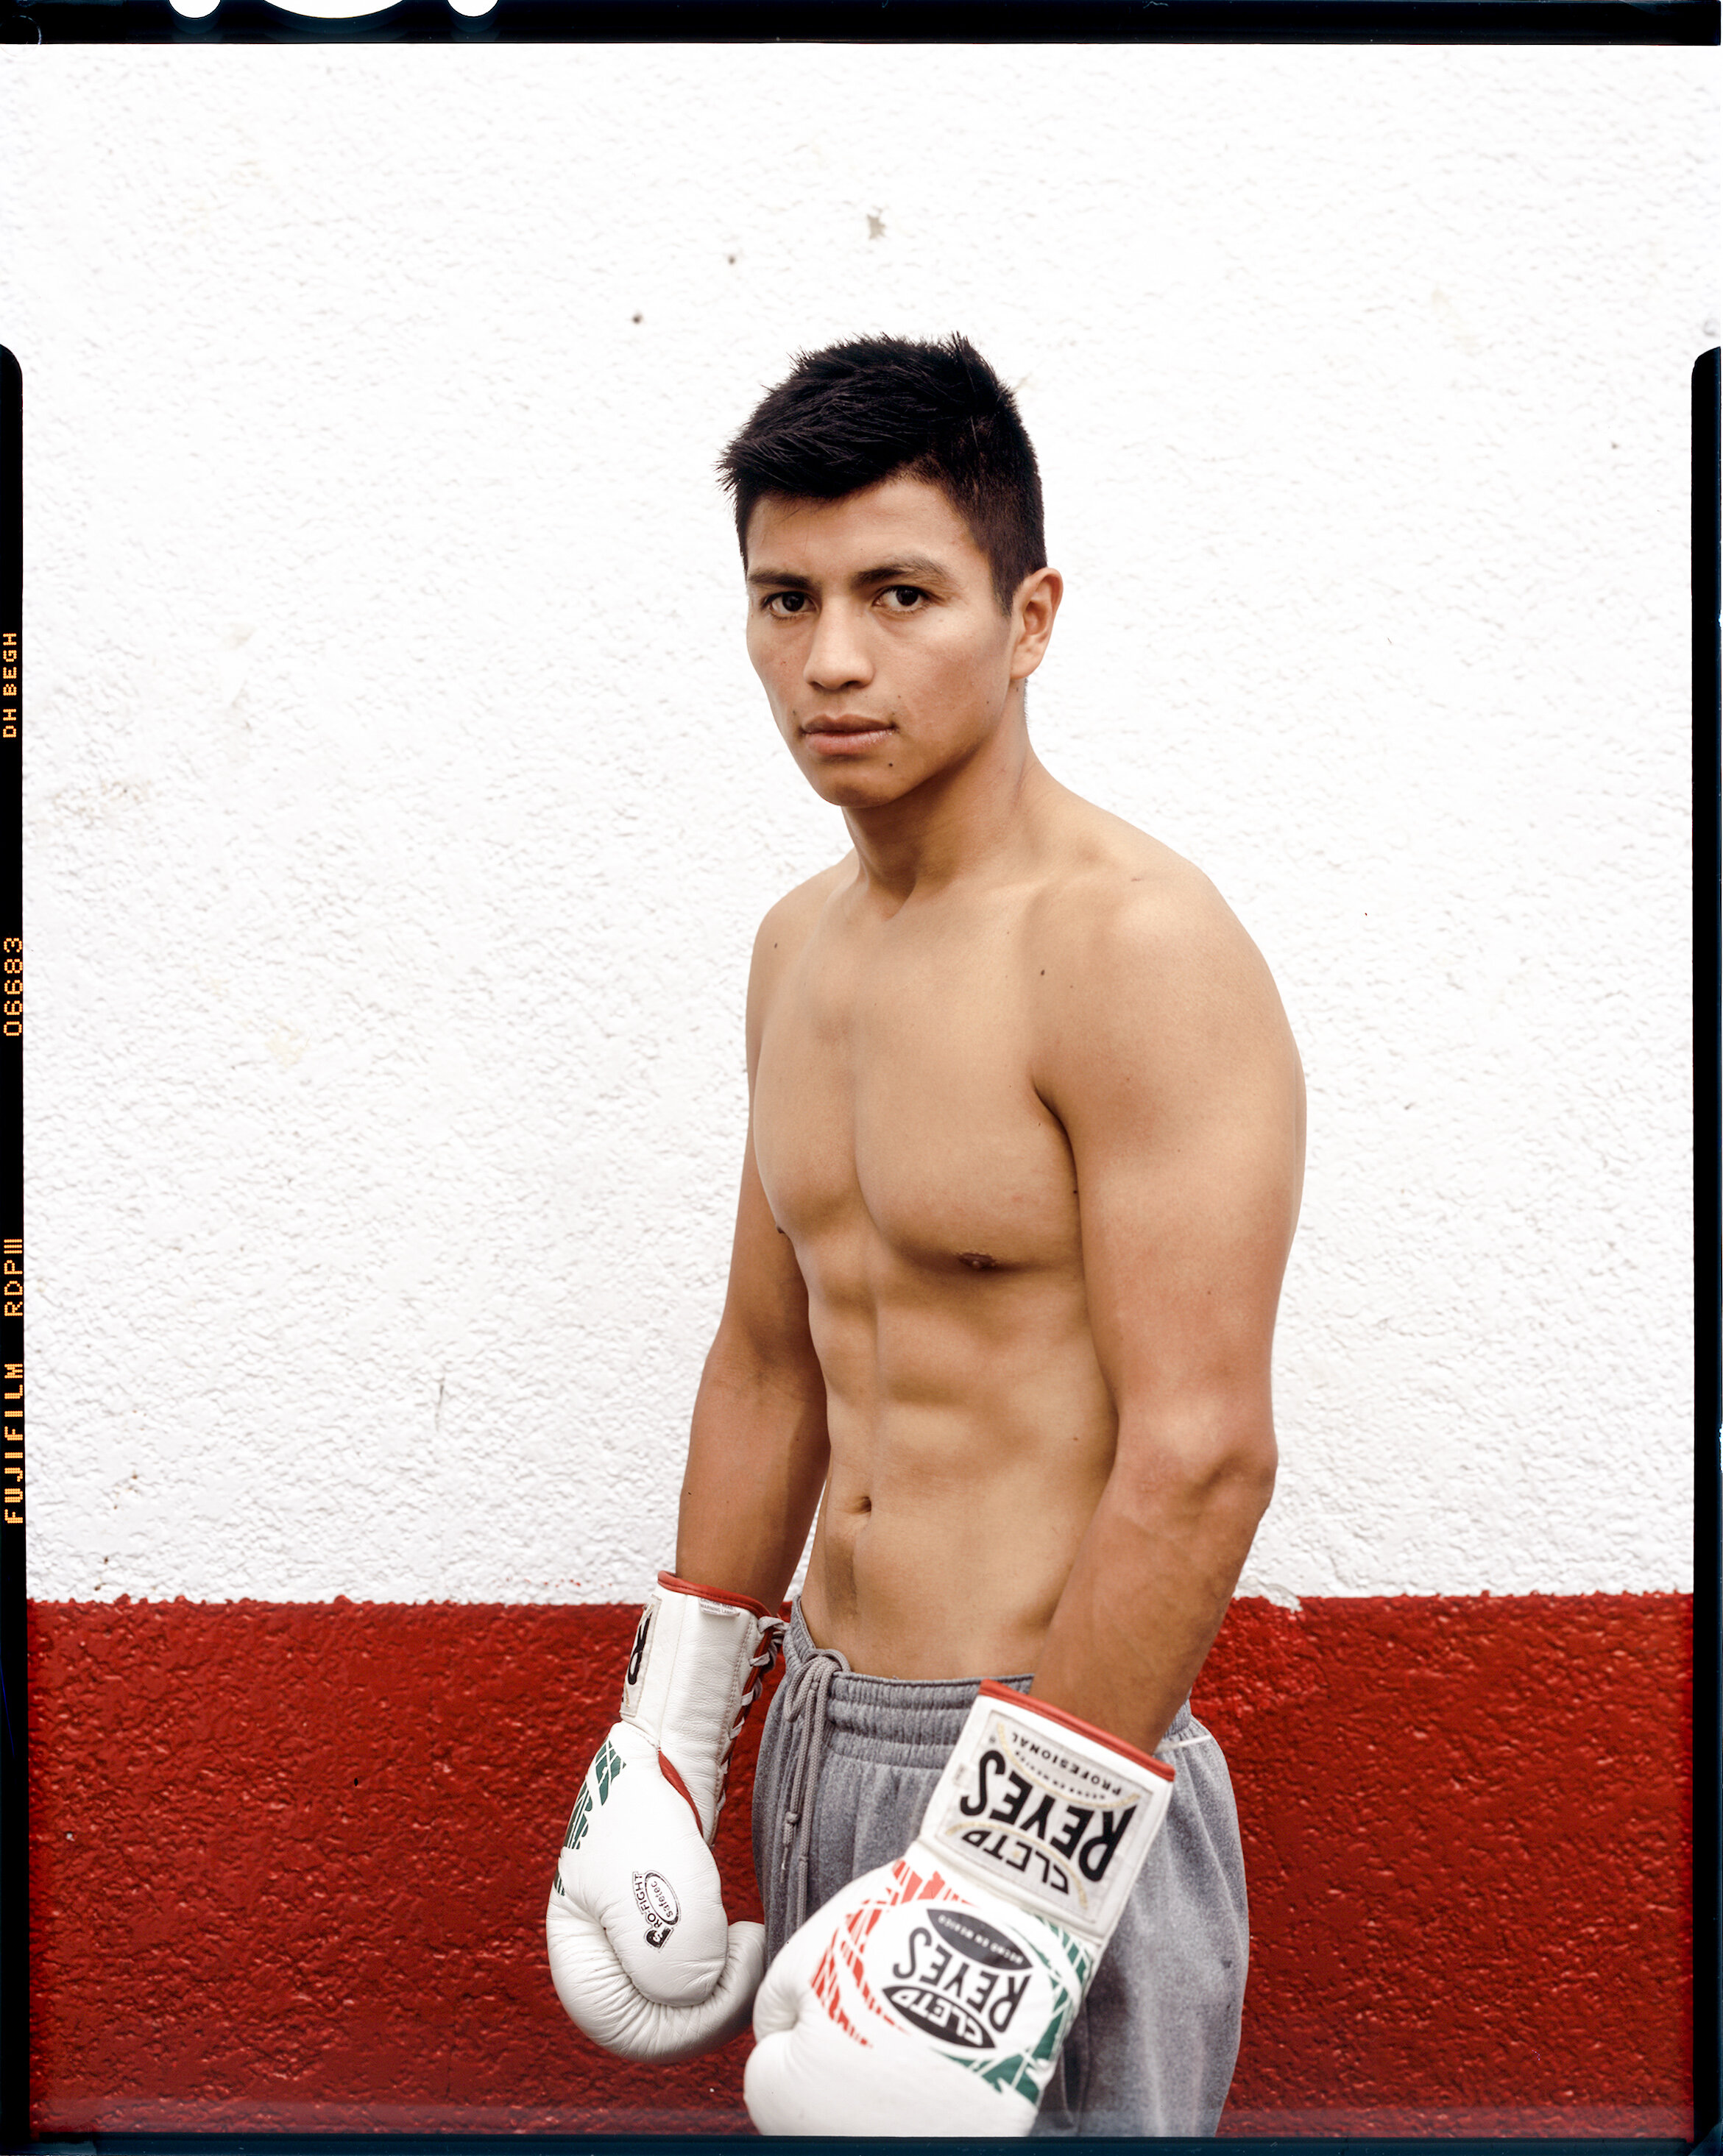 mexico boxingsaveslives-6.jpg